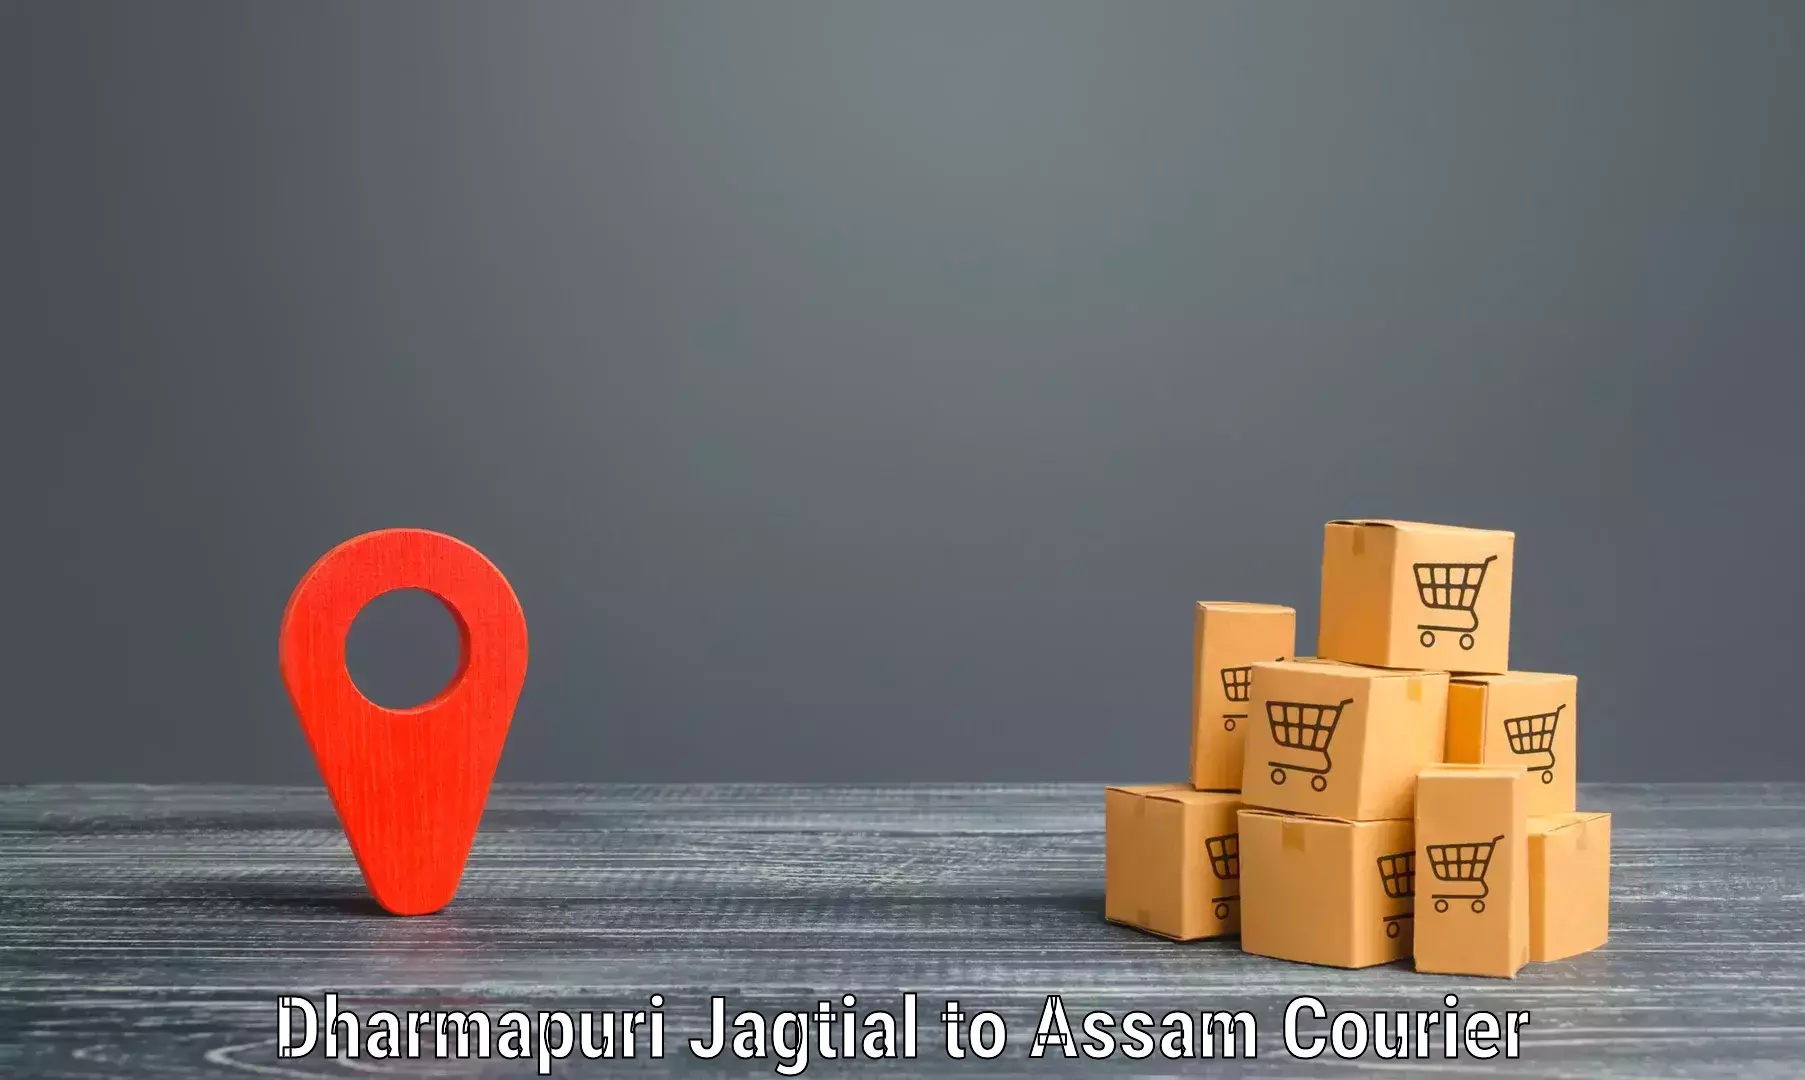 Courier service innovation Dharmapuri Jagtial to Amoni